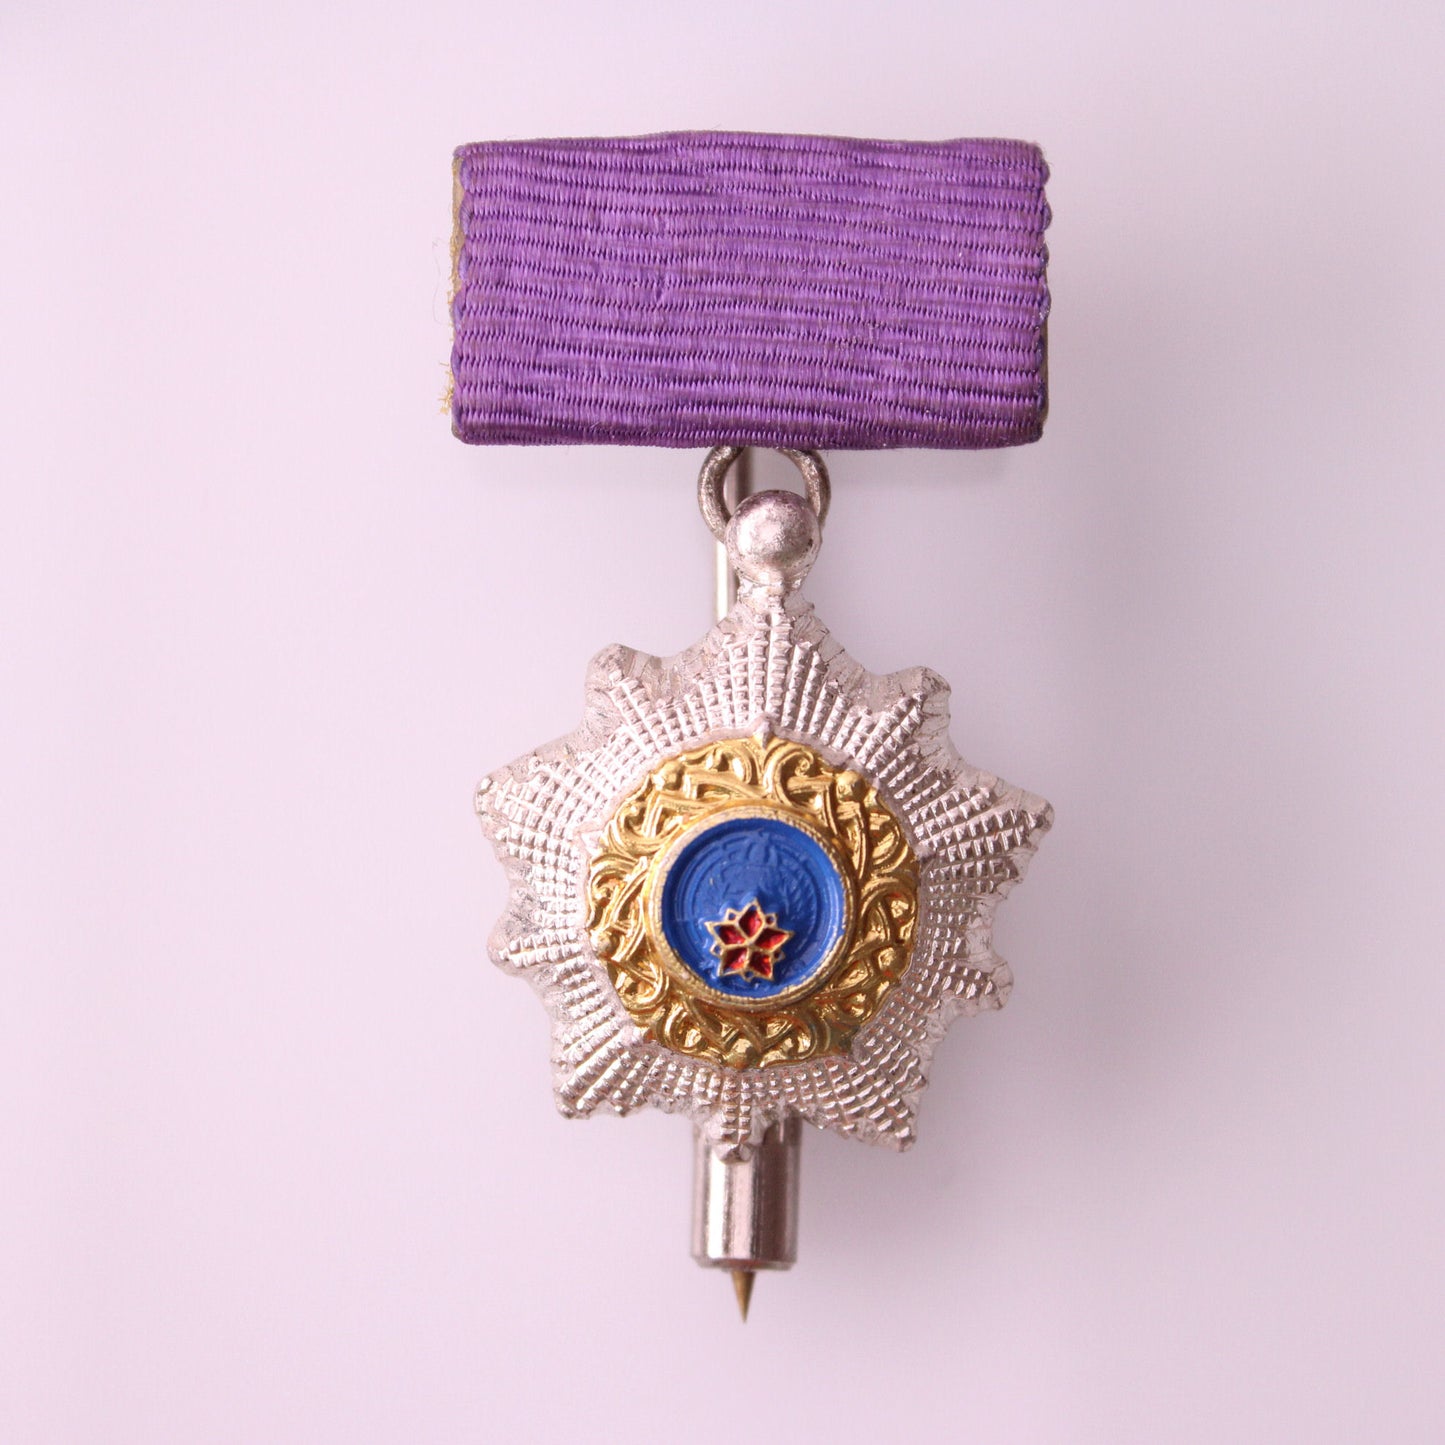 YUGOSLAVIA Order of Yugoslav Star with Golden Wreath, 2nd class / miniature